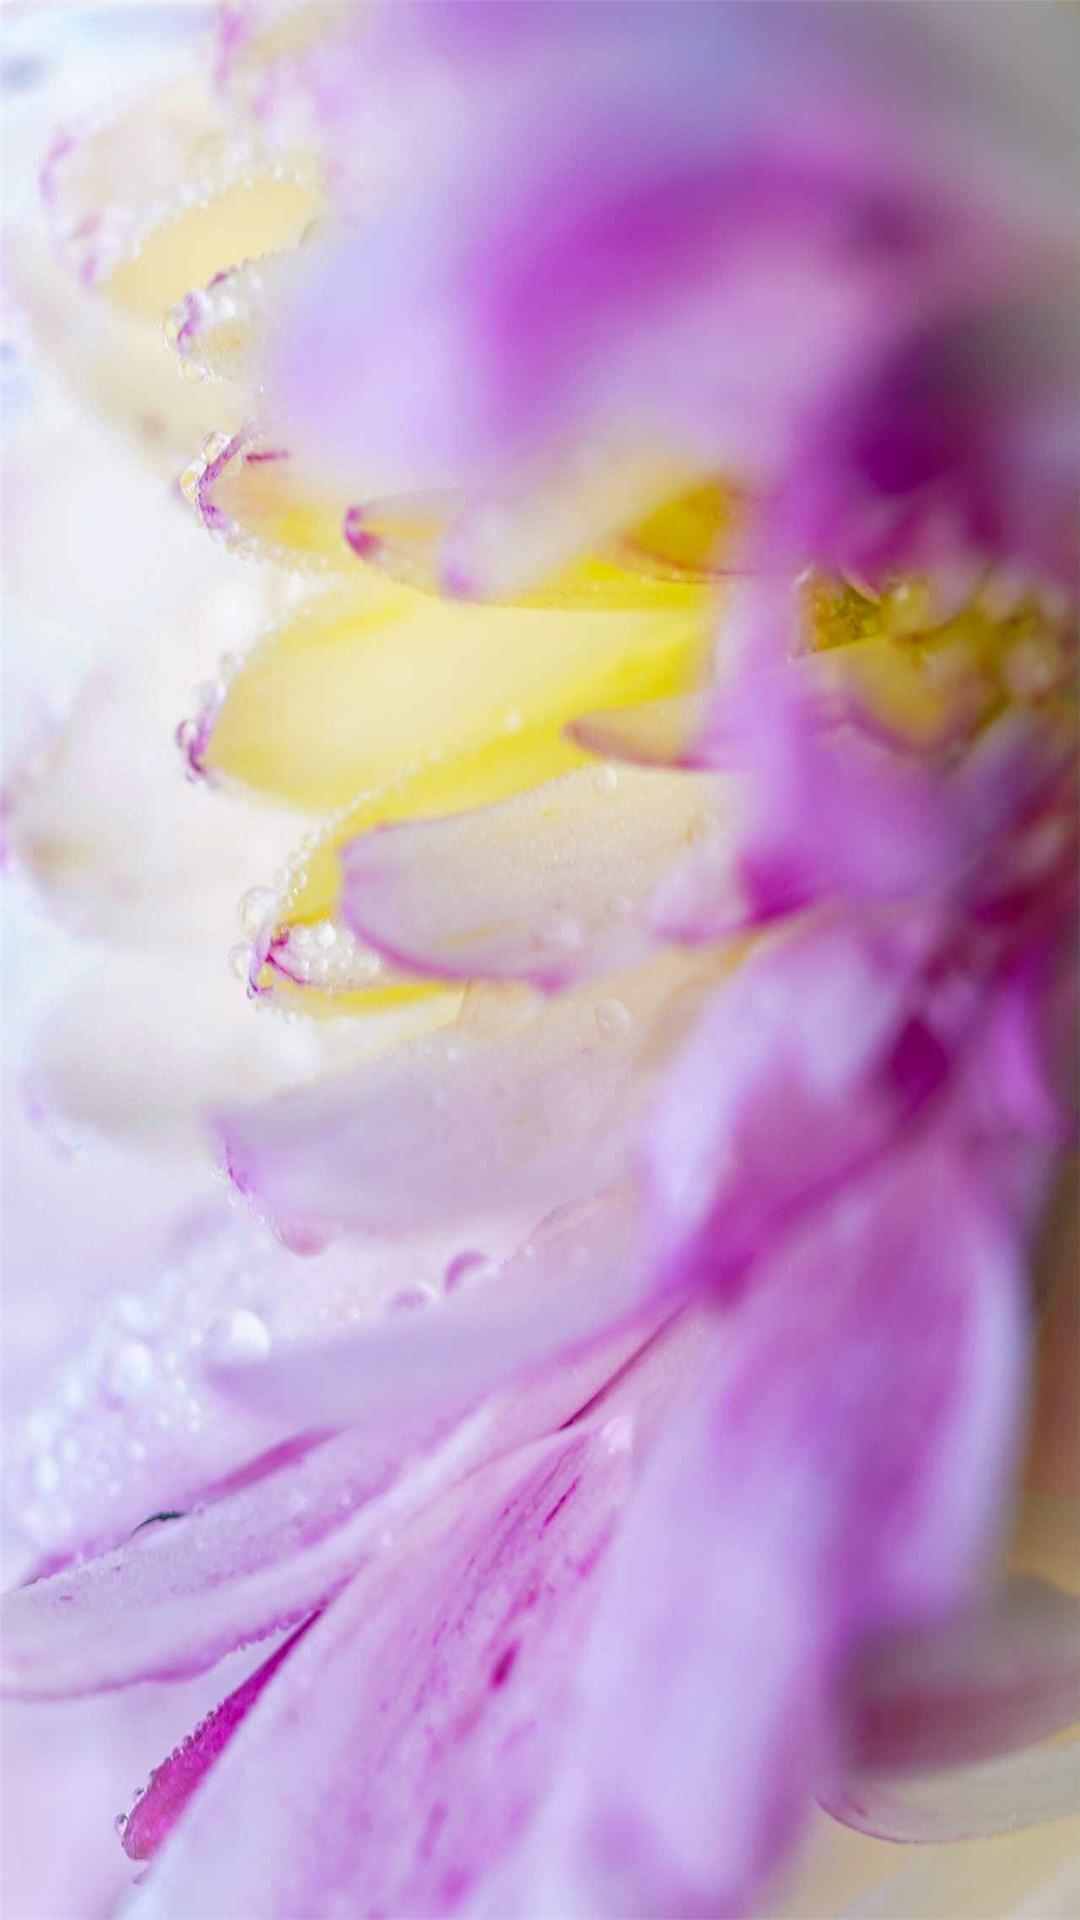 Chrysanthemum Flower iPhone Wallpaper